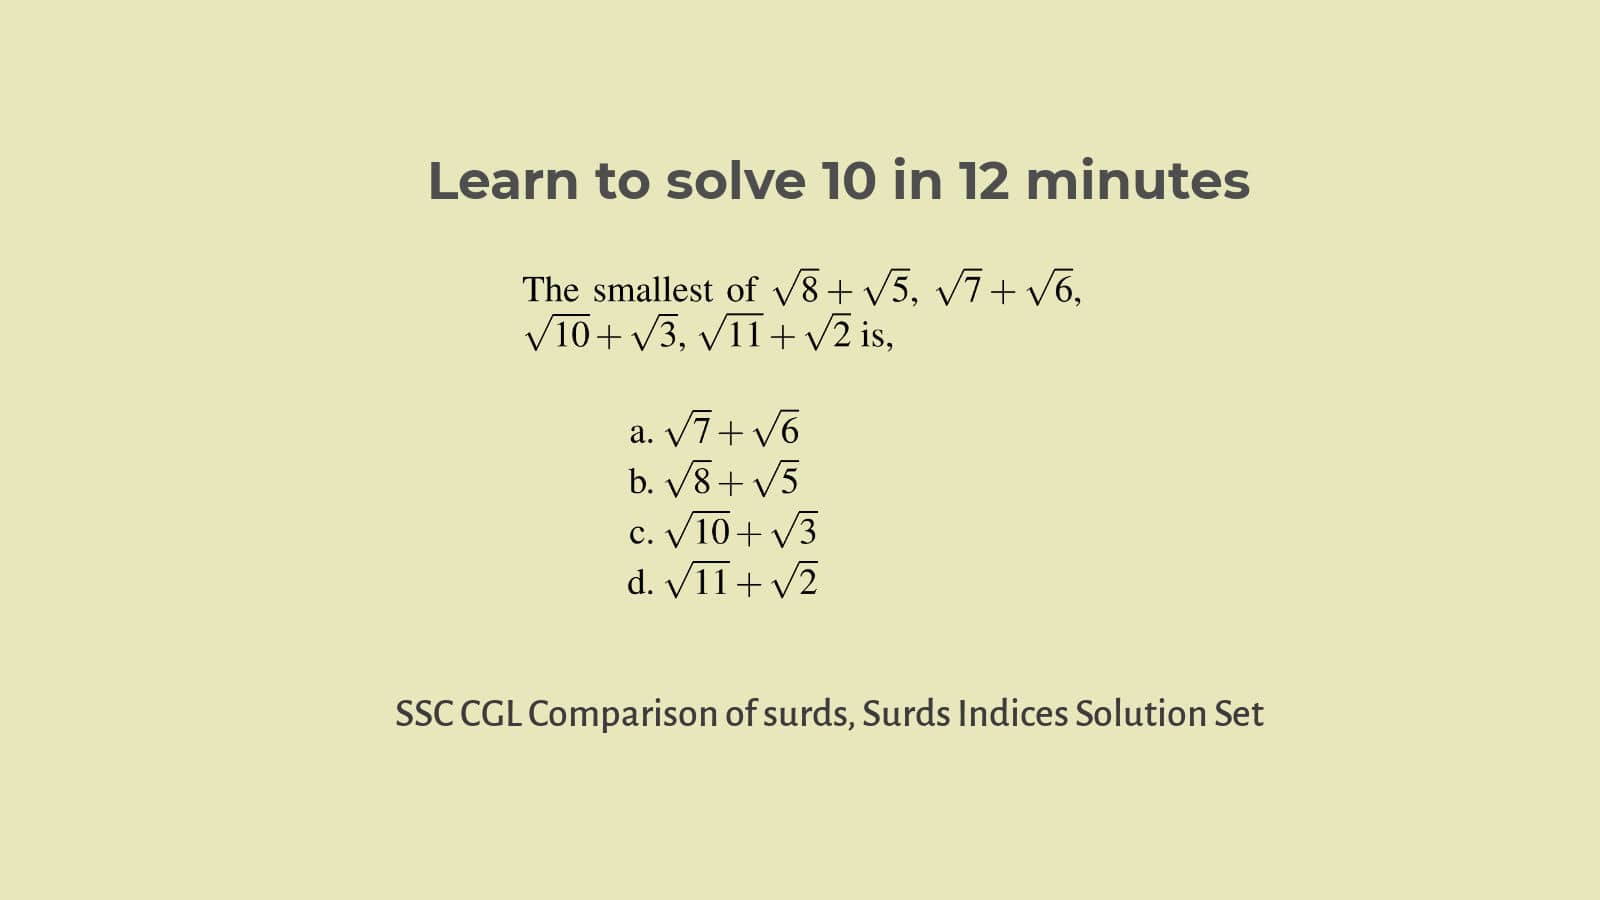 Comparison of surds, Surds and indices questions solution set 61